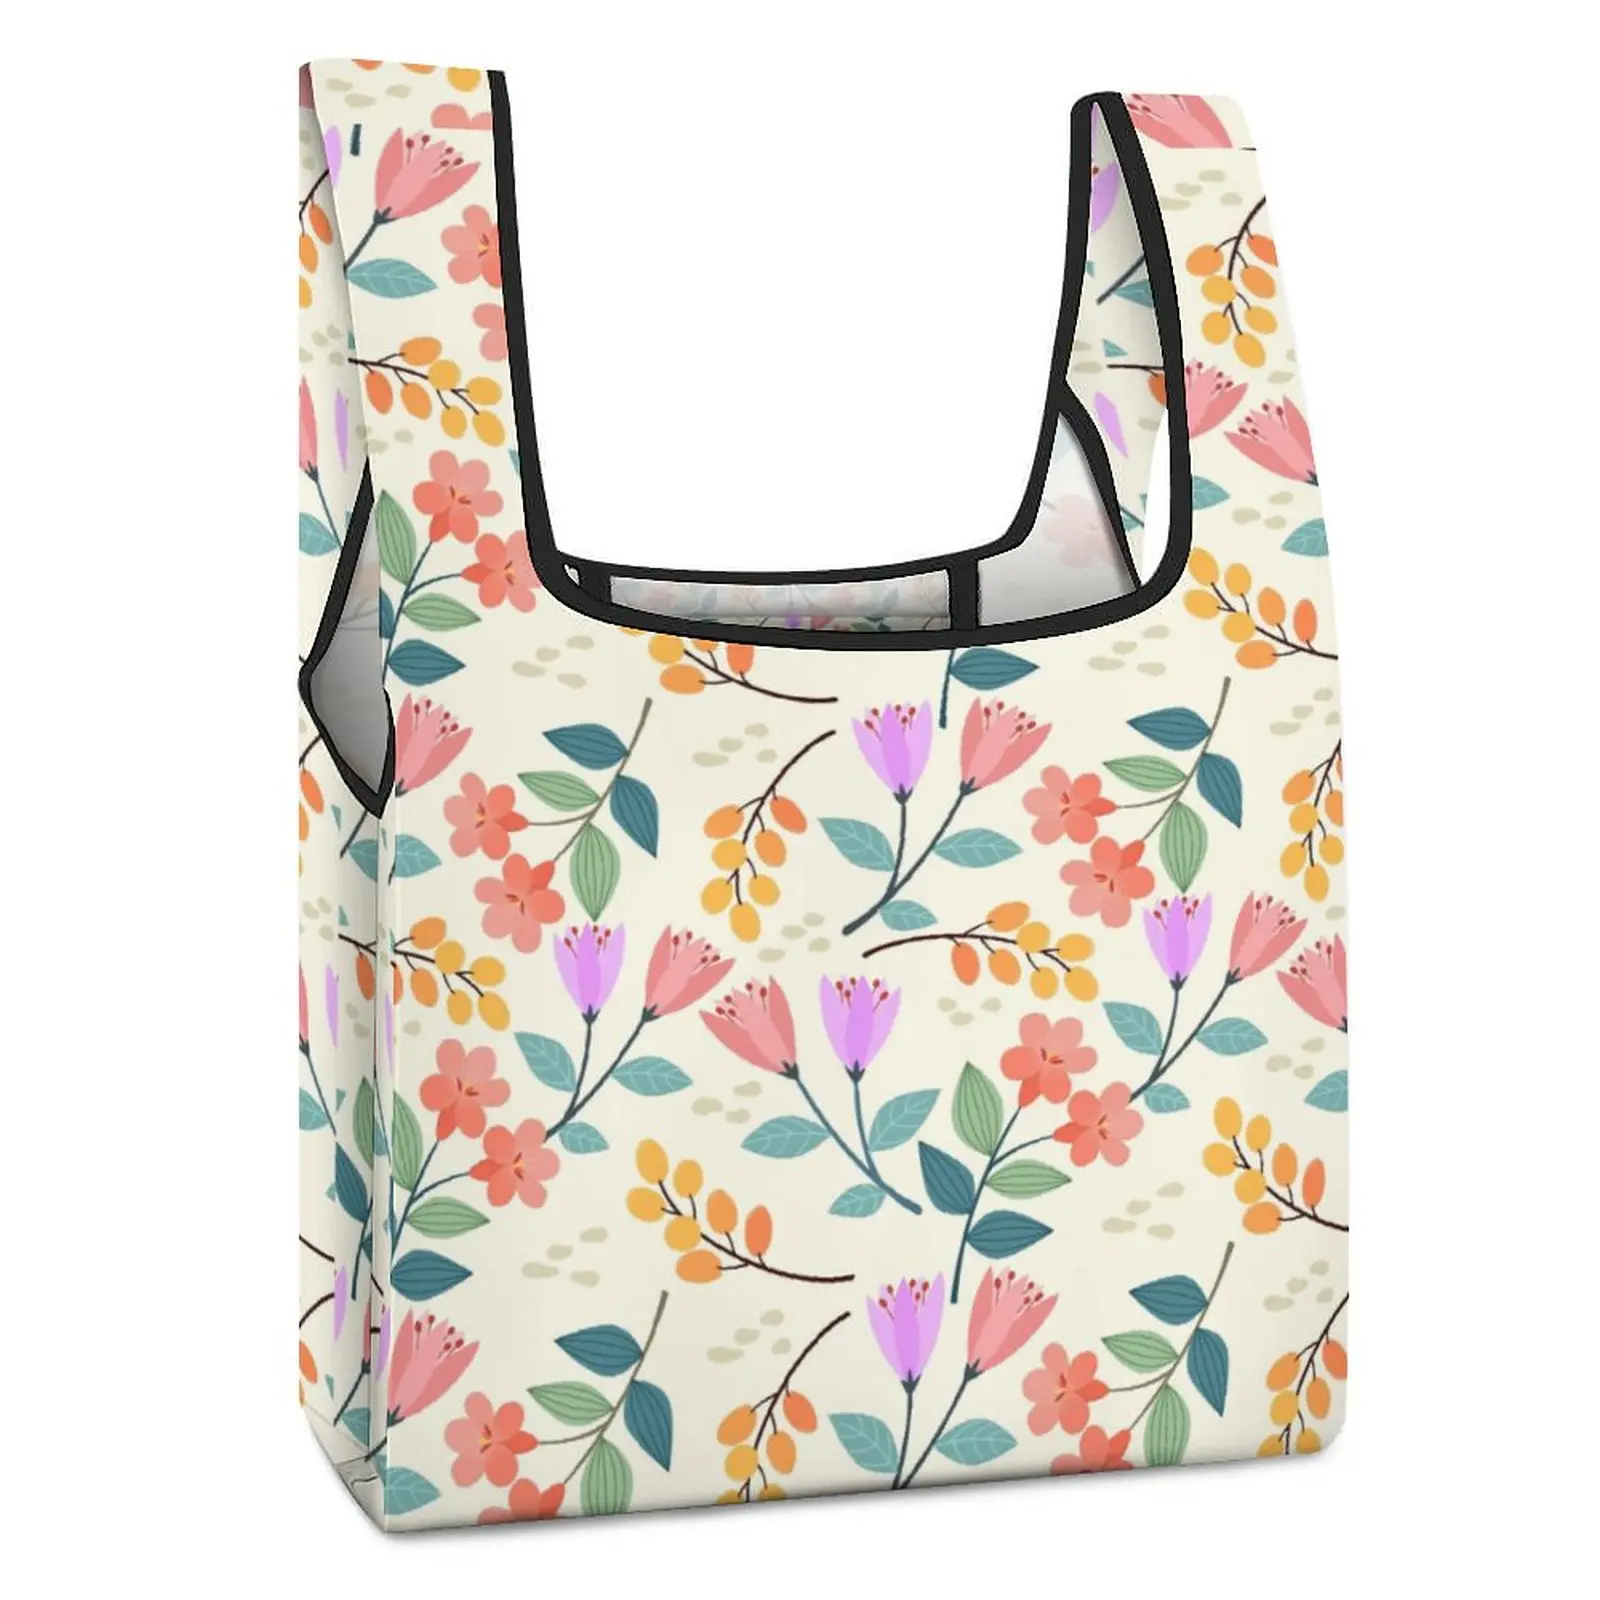 Customize Pattern Shopping Collapsible Shopping Bag Fashion Beach Bag Handbag Large Capacity Double Strap Handbag One Size